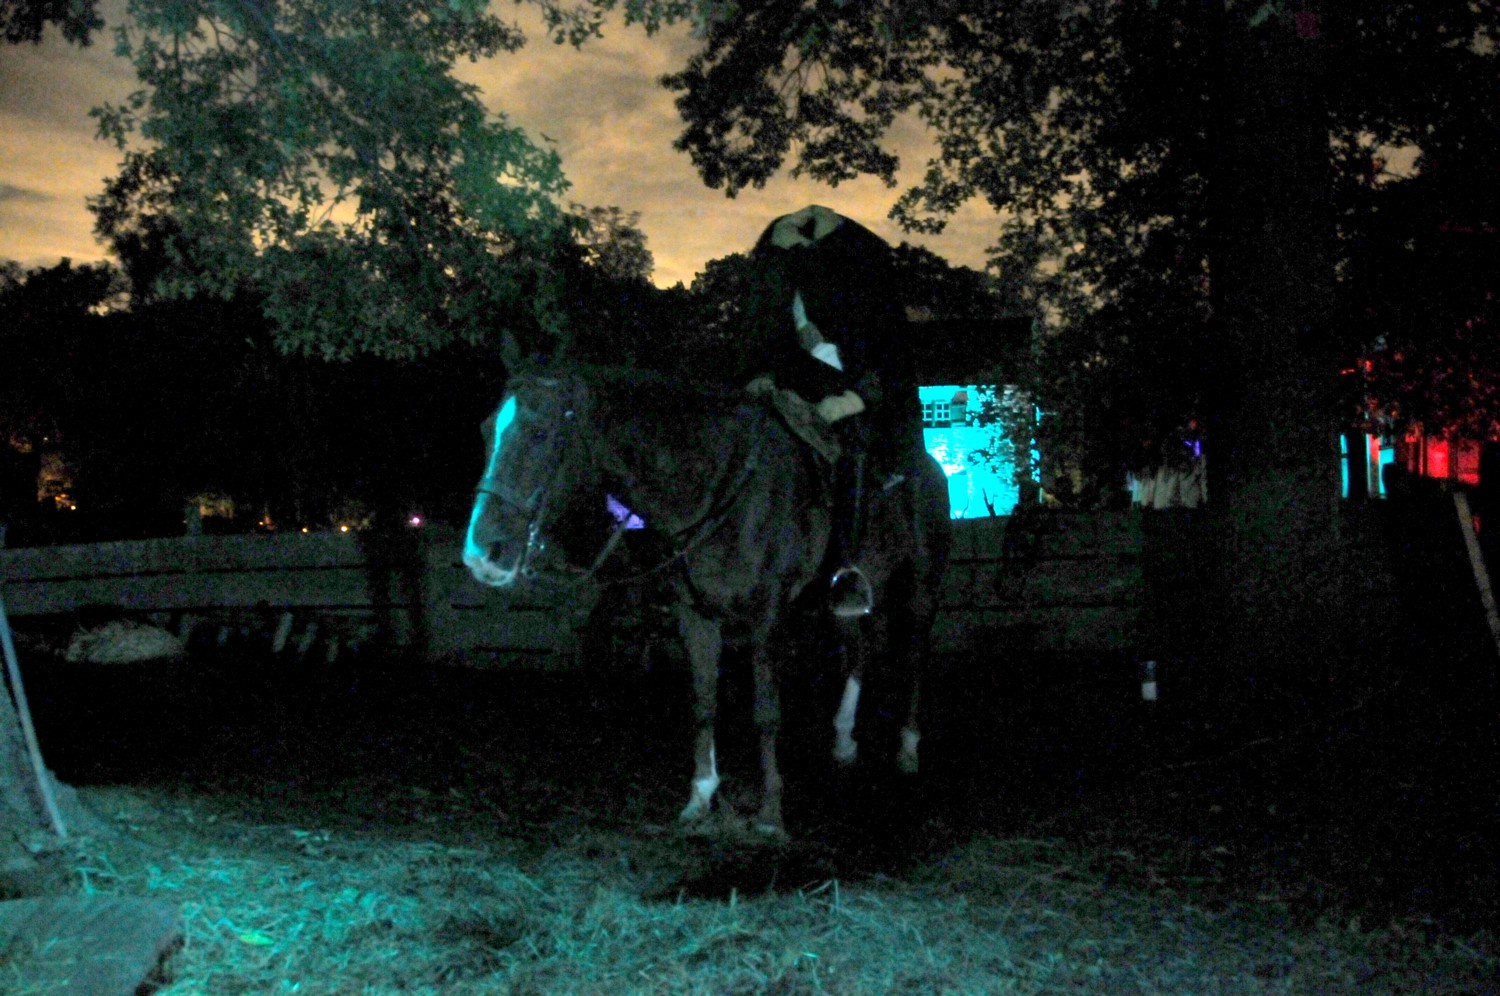 The Headless Horseman comes out of the shadows at Horseman’s Hollow, at Philipsburg Manor in Sleepy Hollow, NY © 2016 Karen Rubin/goingplacesfarandnear.com